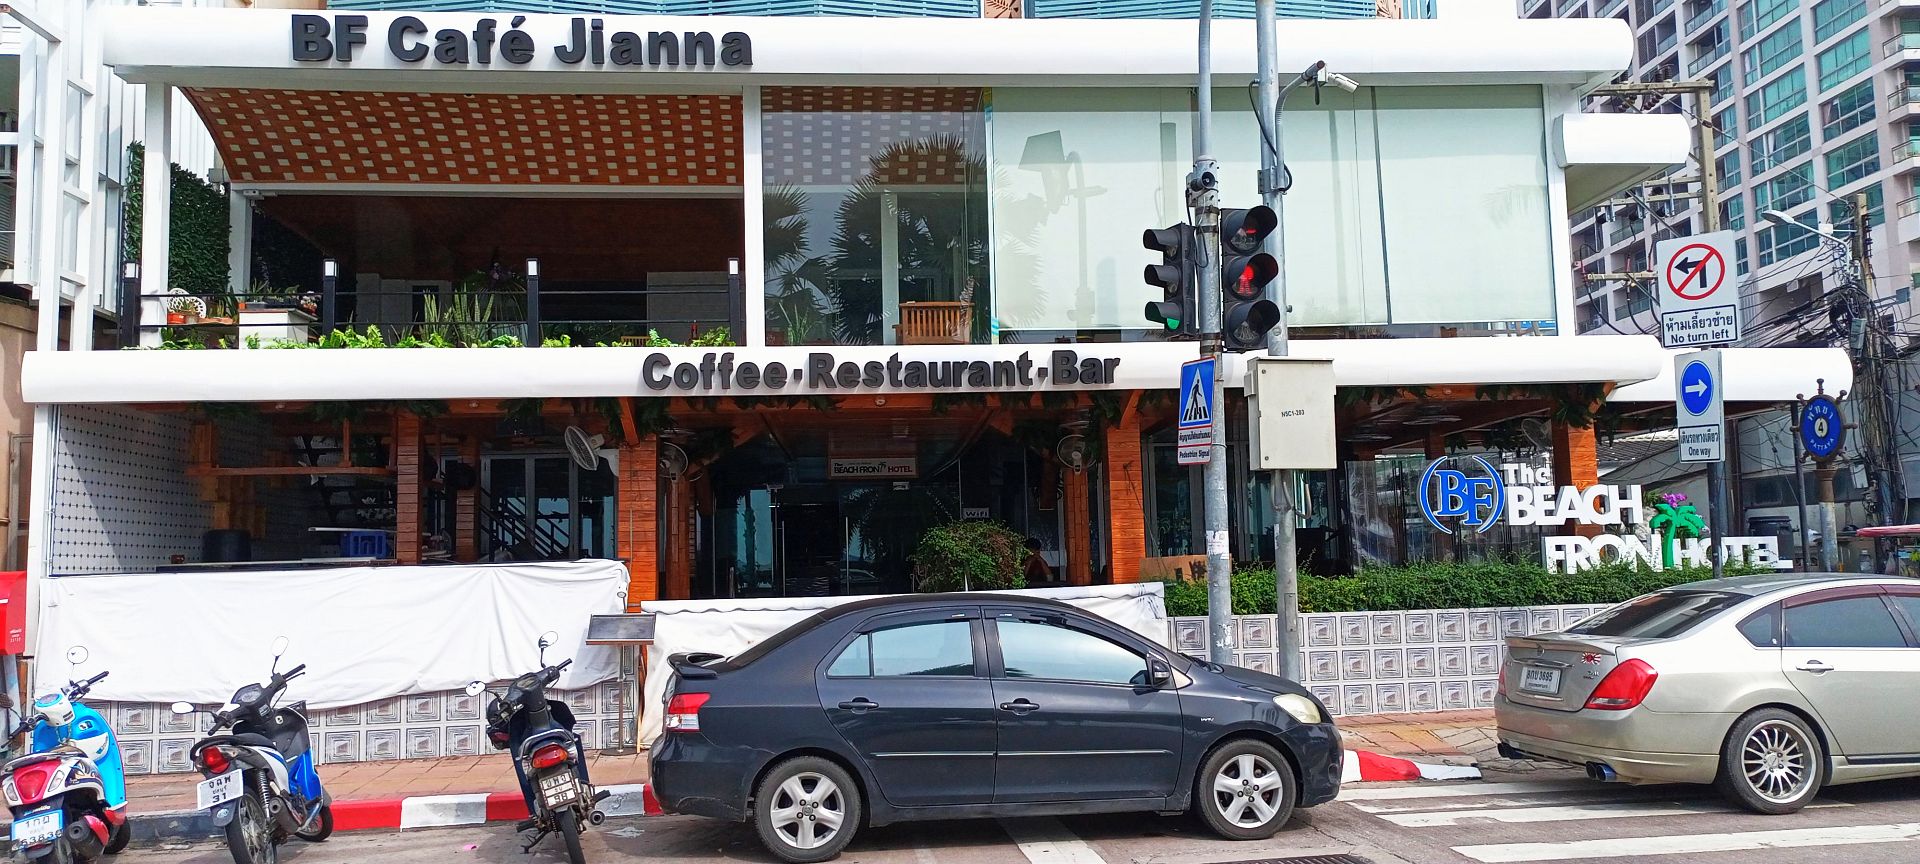 Café Jianna at the Beach Front Hotel